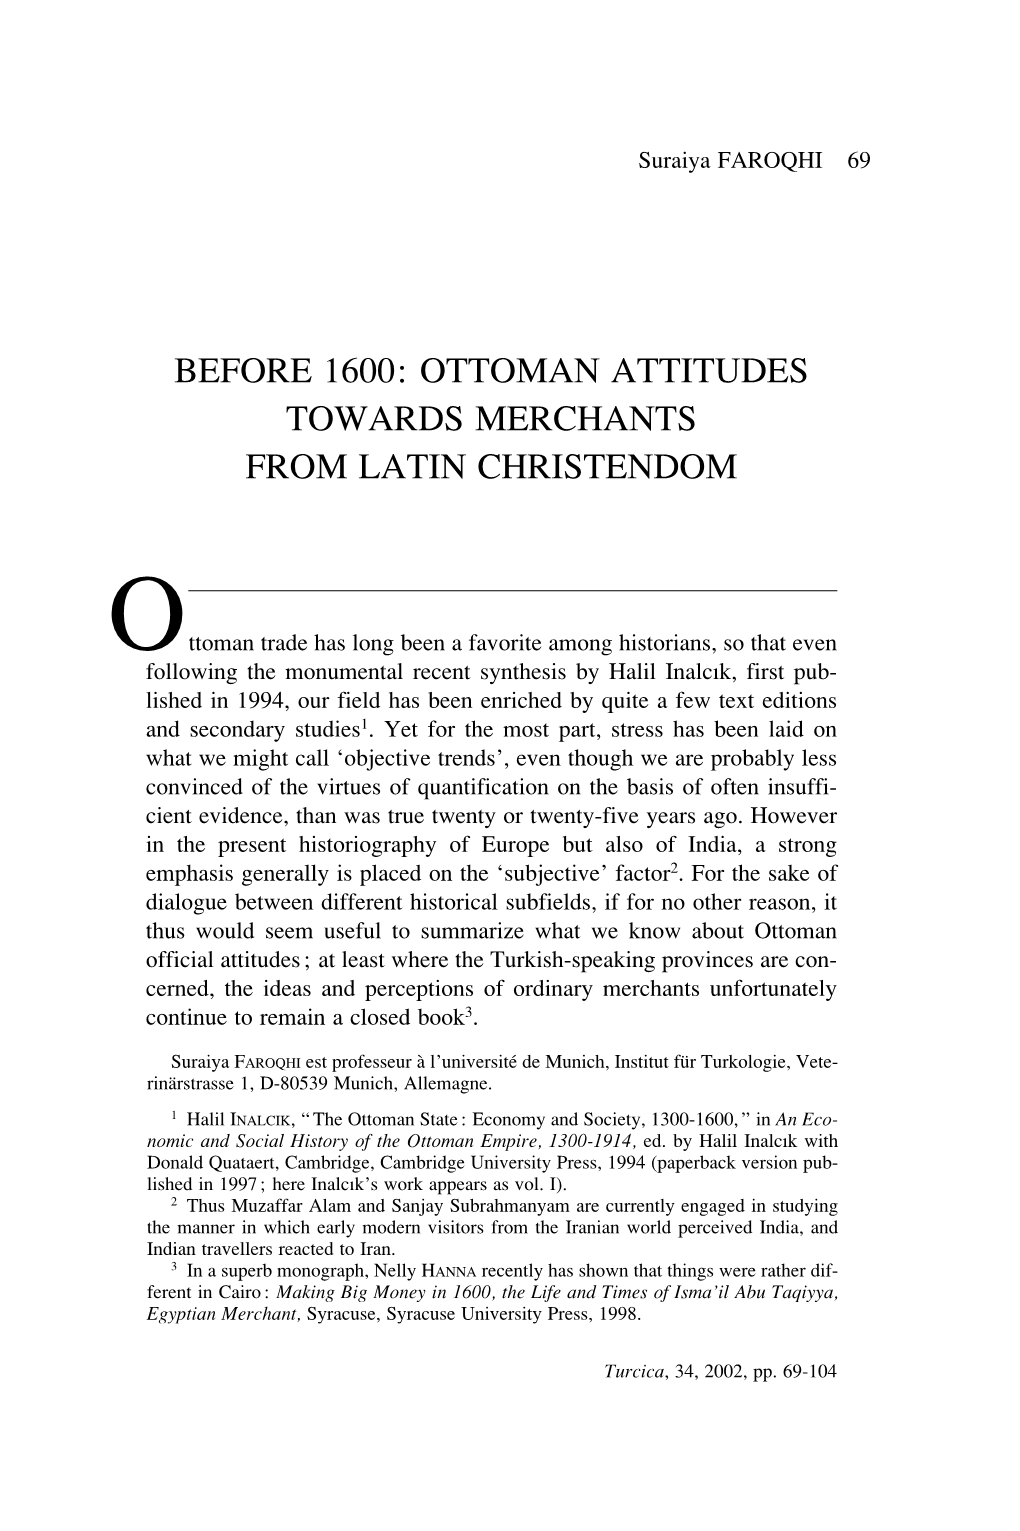 Ottoman Attitudes Towards Merchants from Latin Christendom